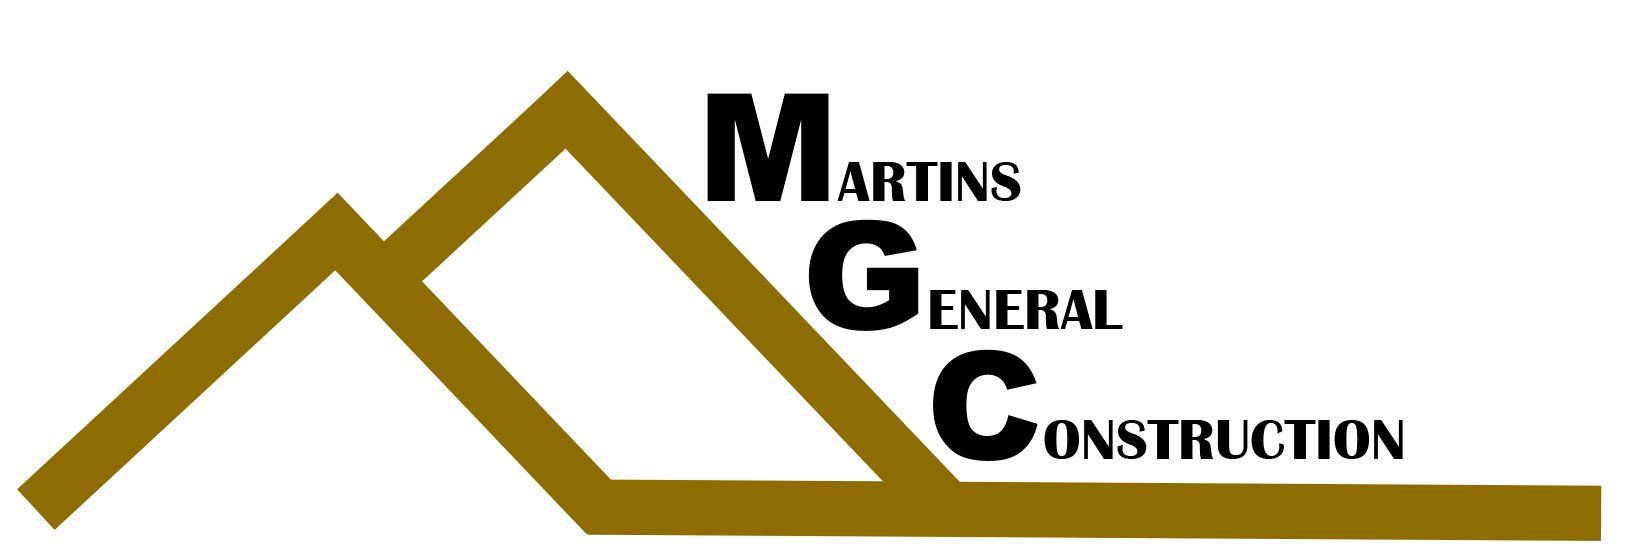 Martin's General Construction - Logo